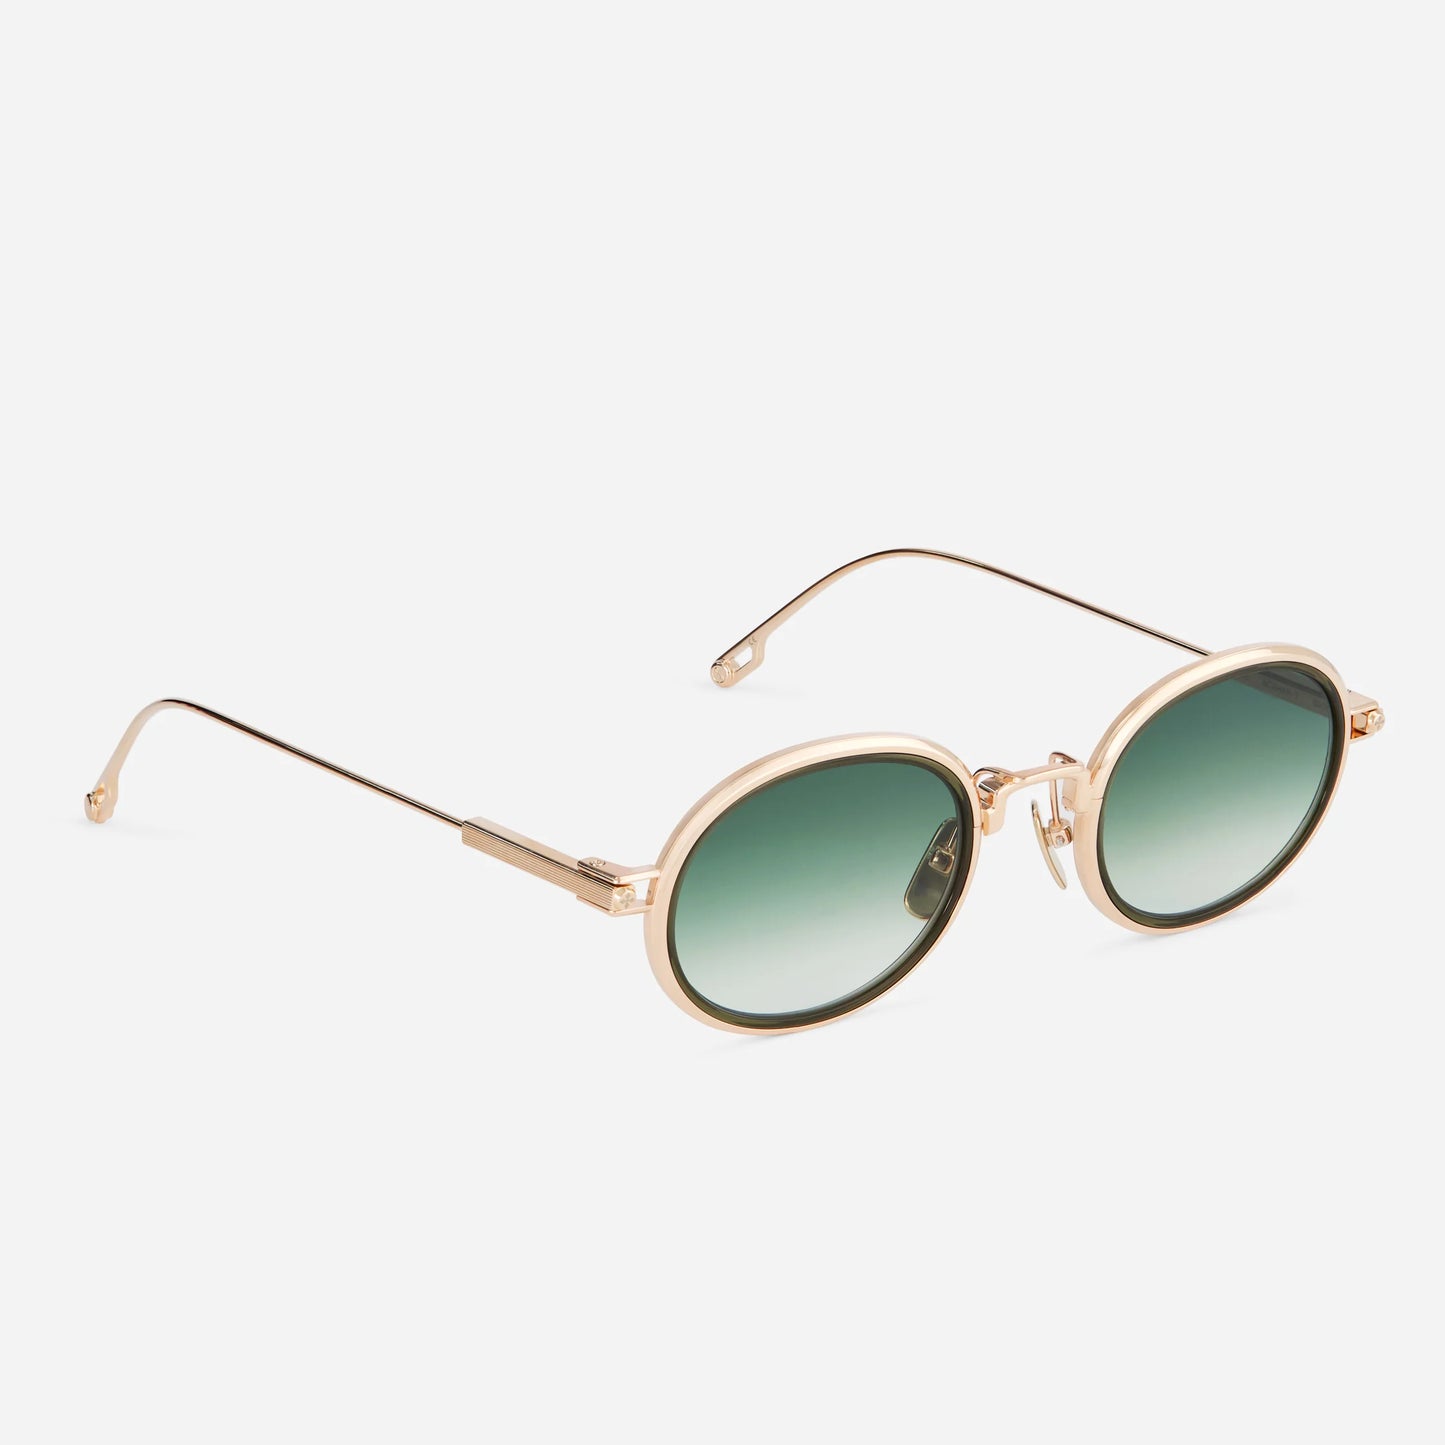 Sato Acamar-T S1109 fashion sunglasses featuring a green olive takiron rim insert.